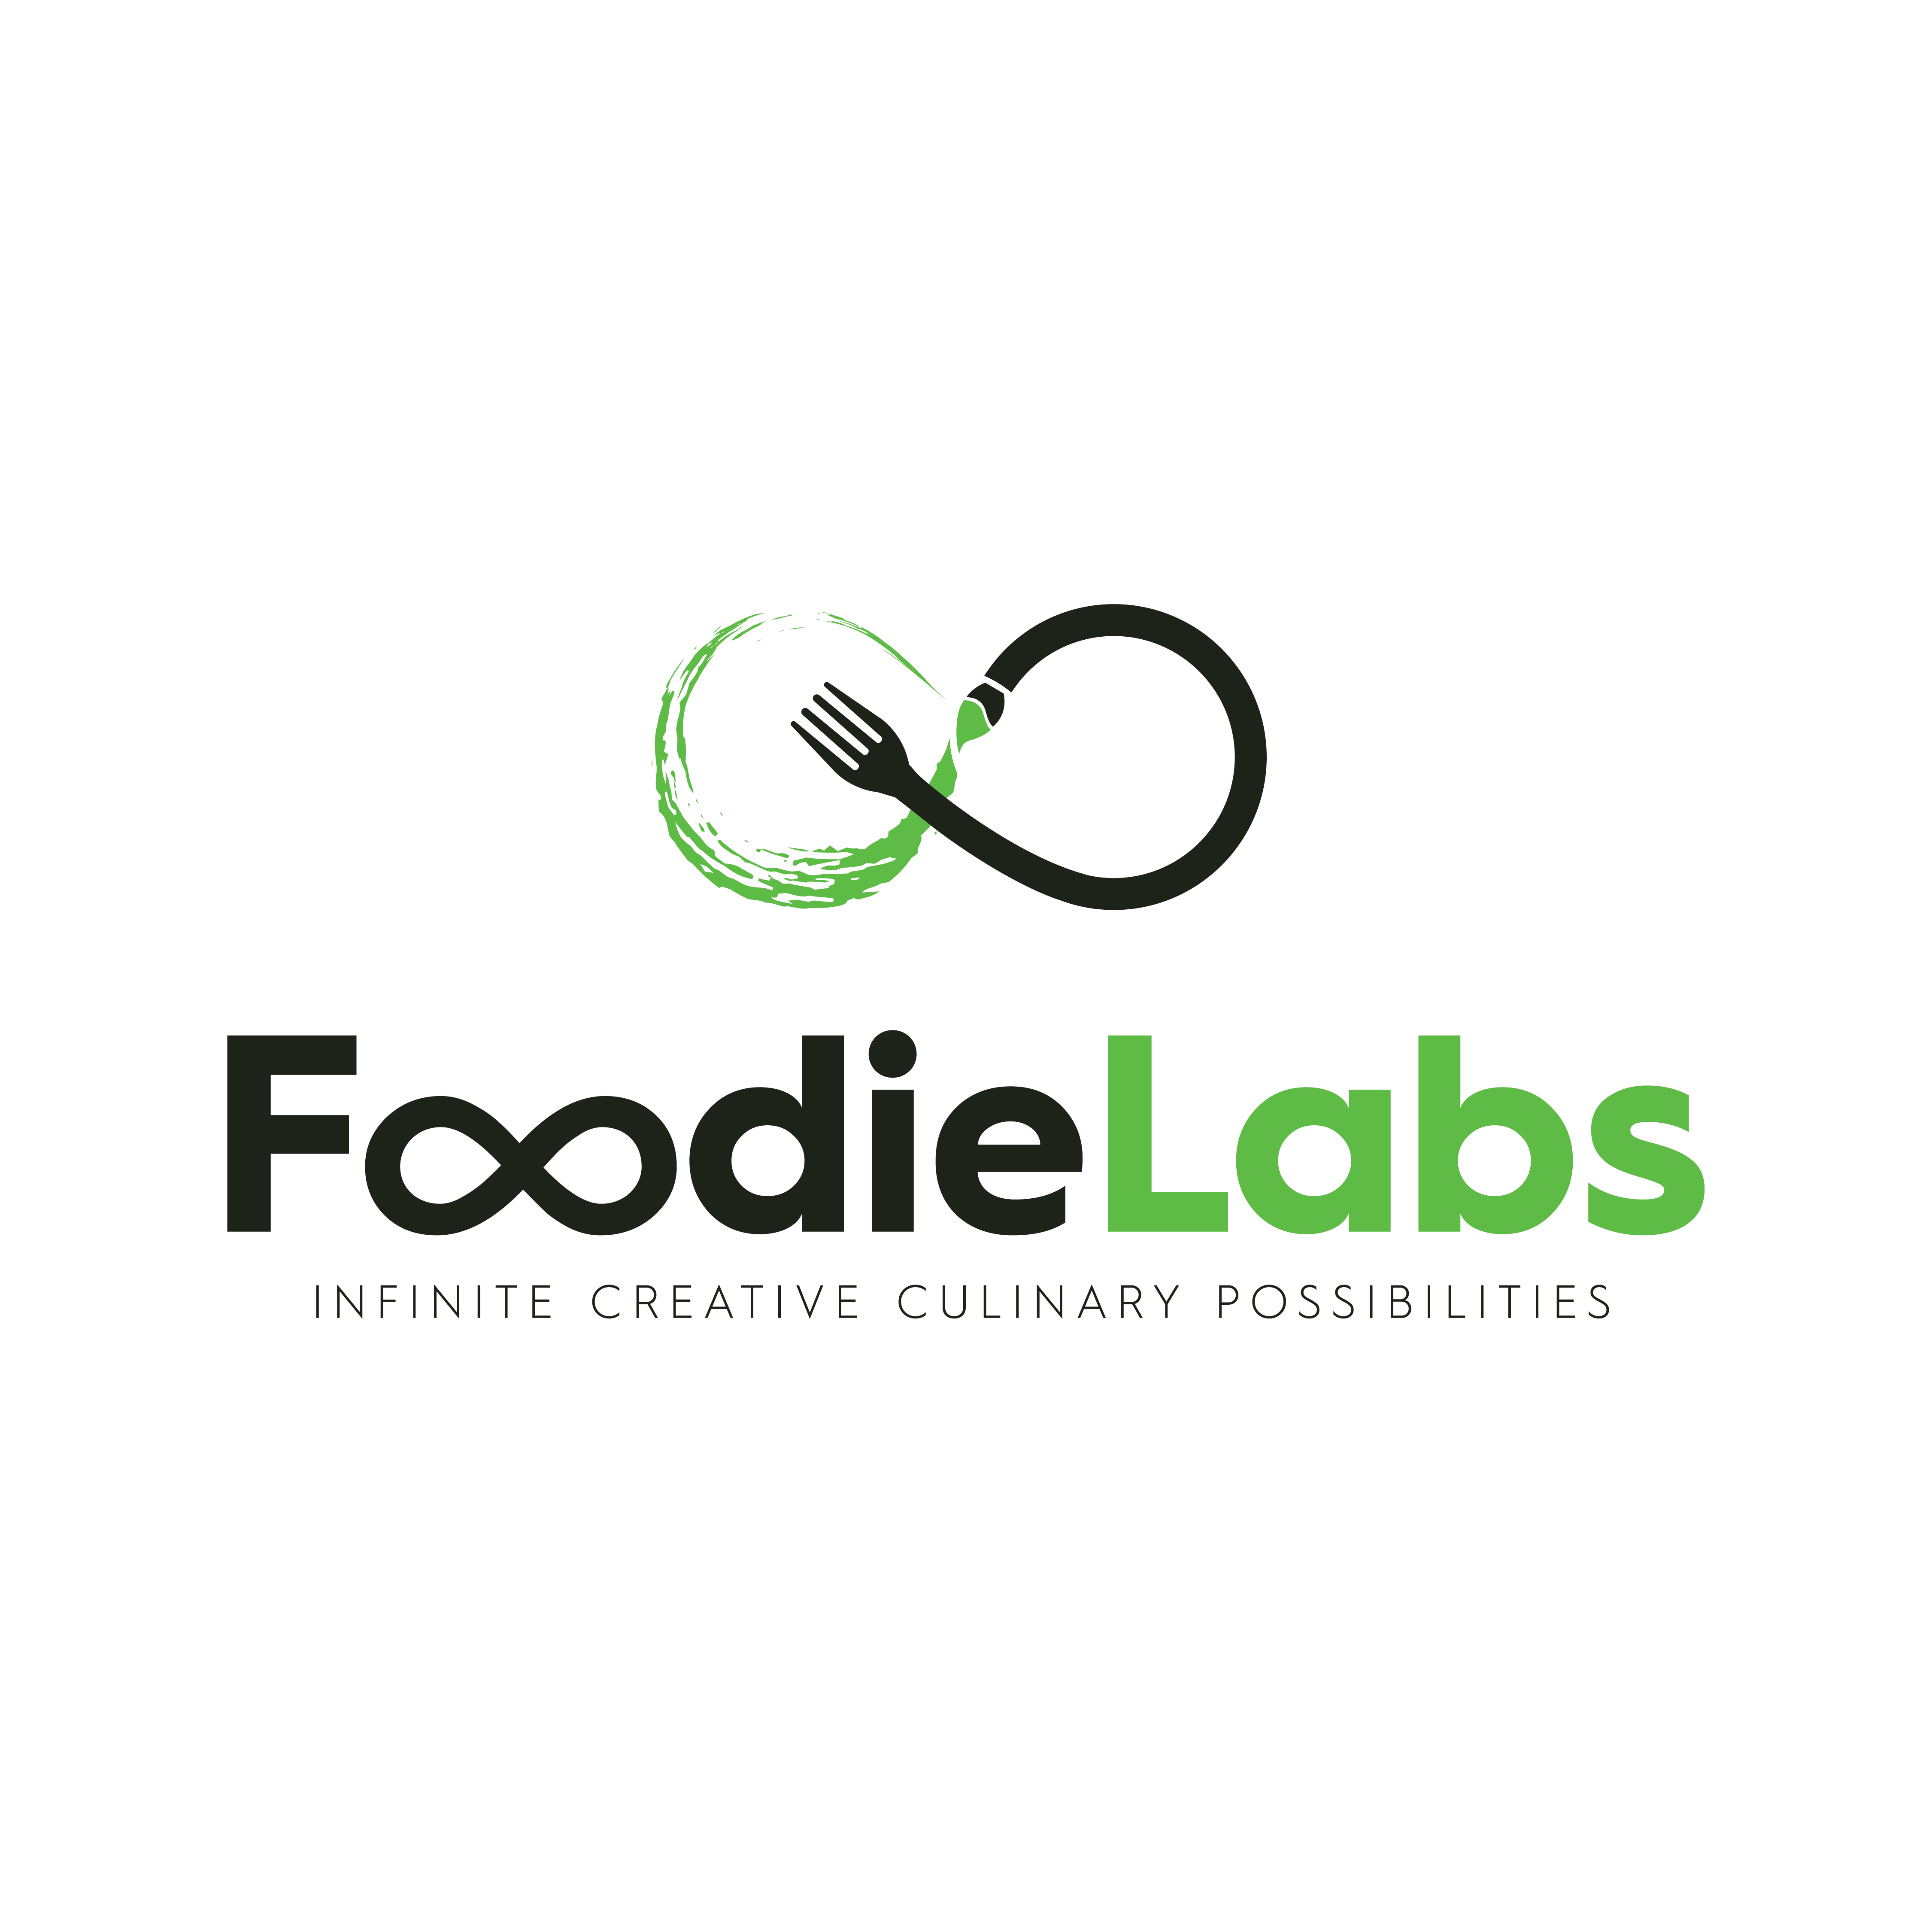 The Foodie Labs